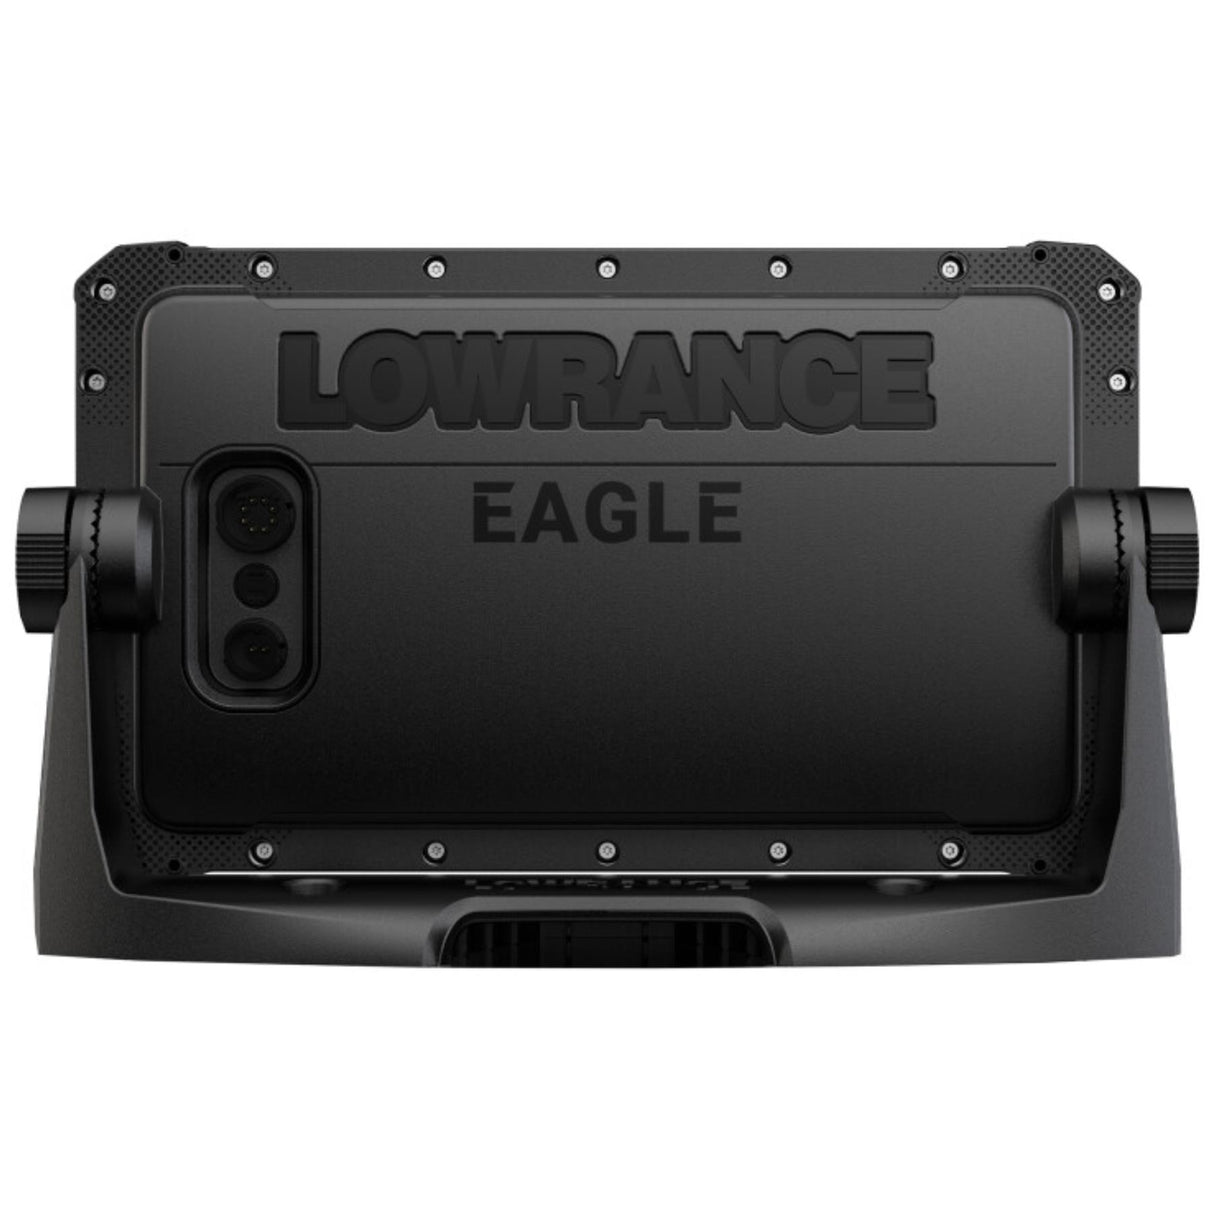 Lowrance Eagle 5 Fishfinder/ Chartplotter Only - Pre-loaded Worldwide Basemap, No Transducer